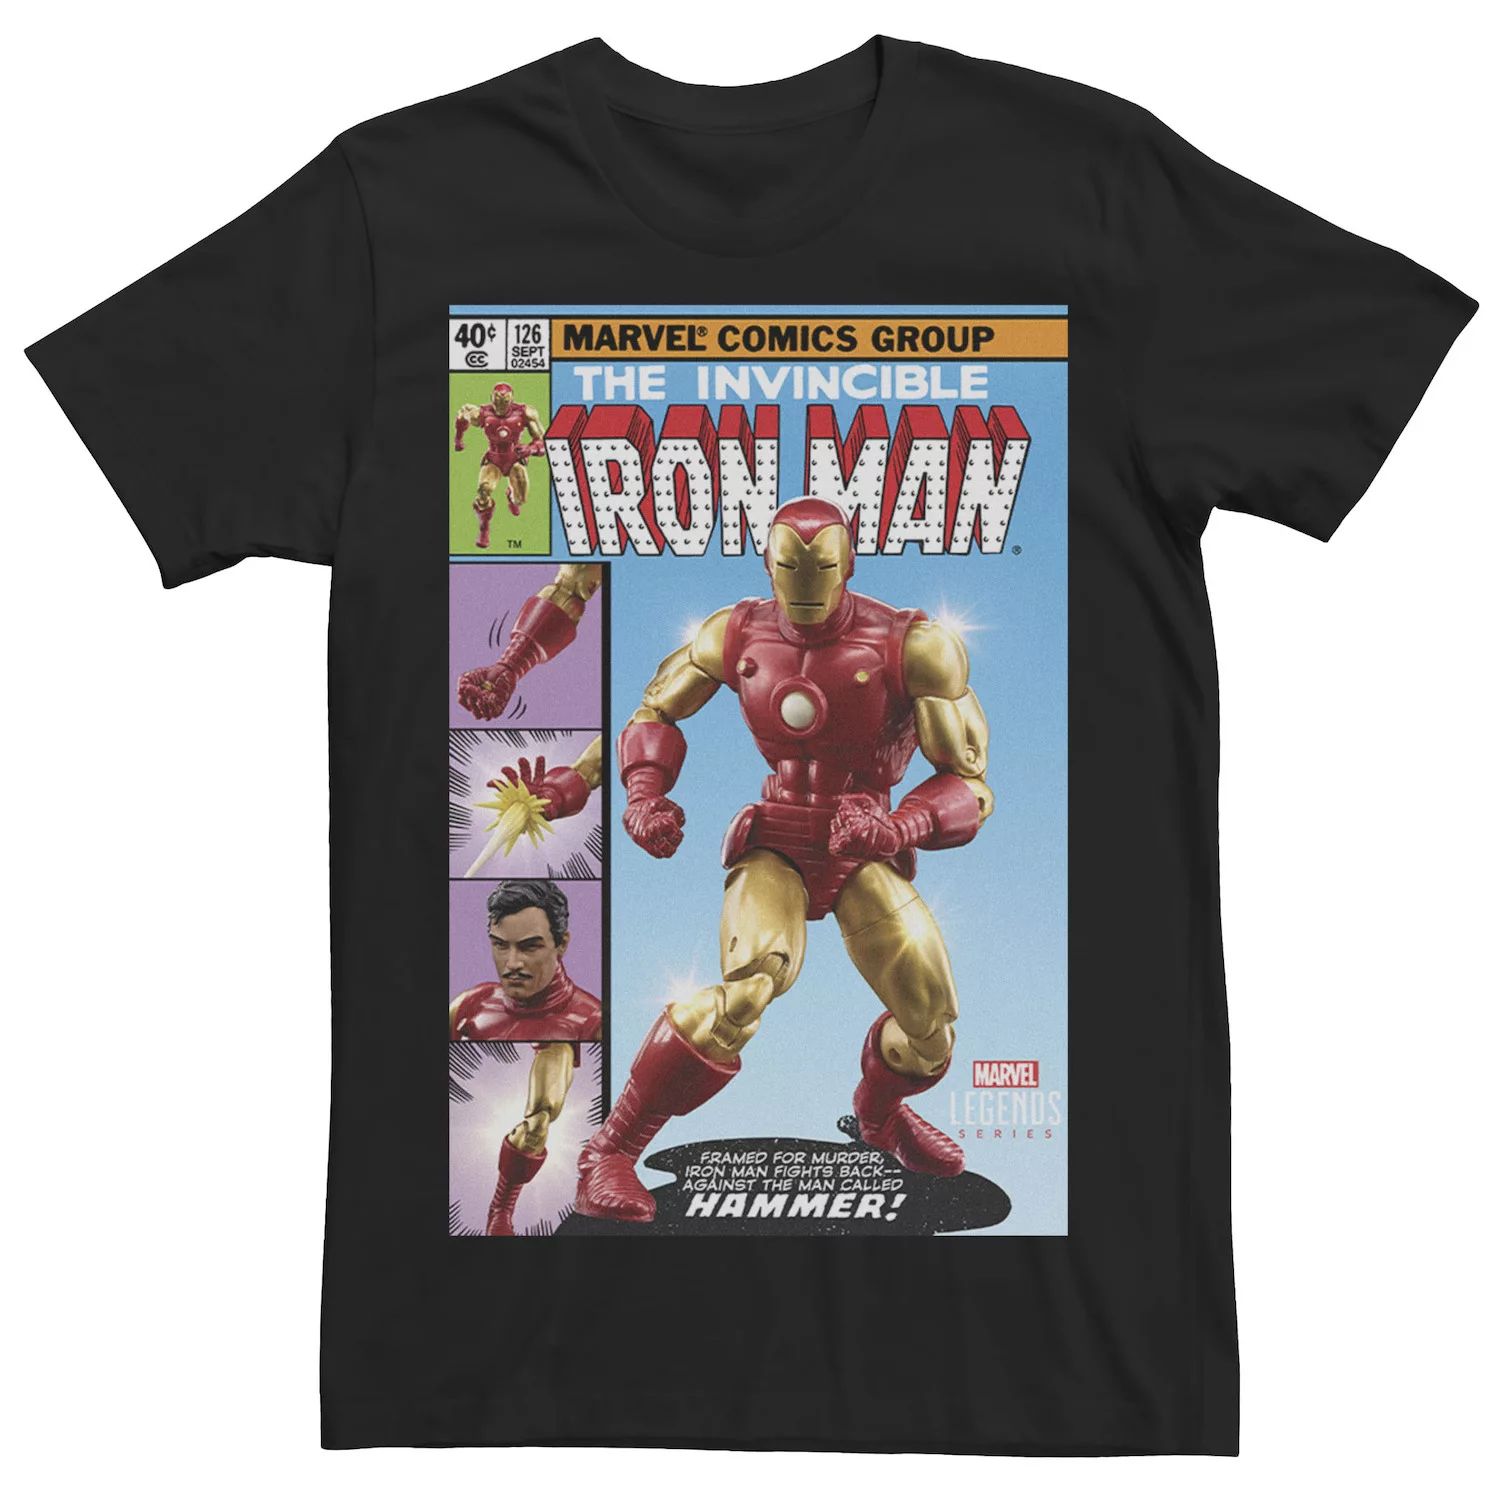 

Мужская футболка из серии Marvel Legends The Invincible Iron Man с обложкой комиксов Licensed Character